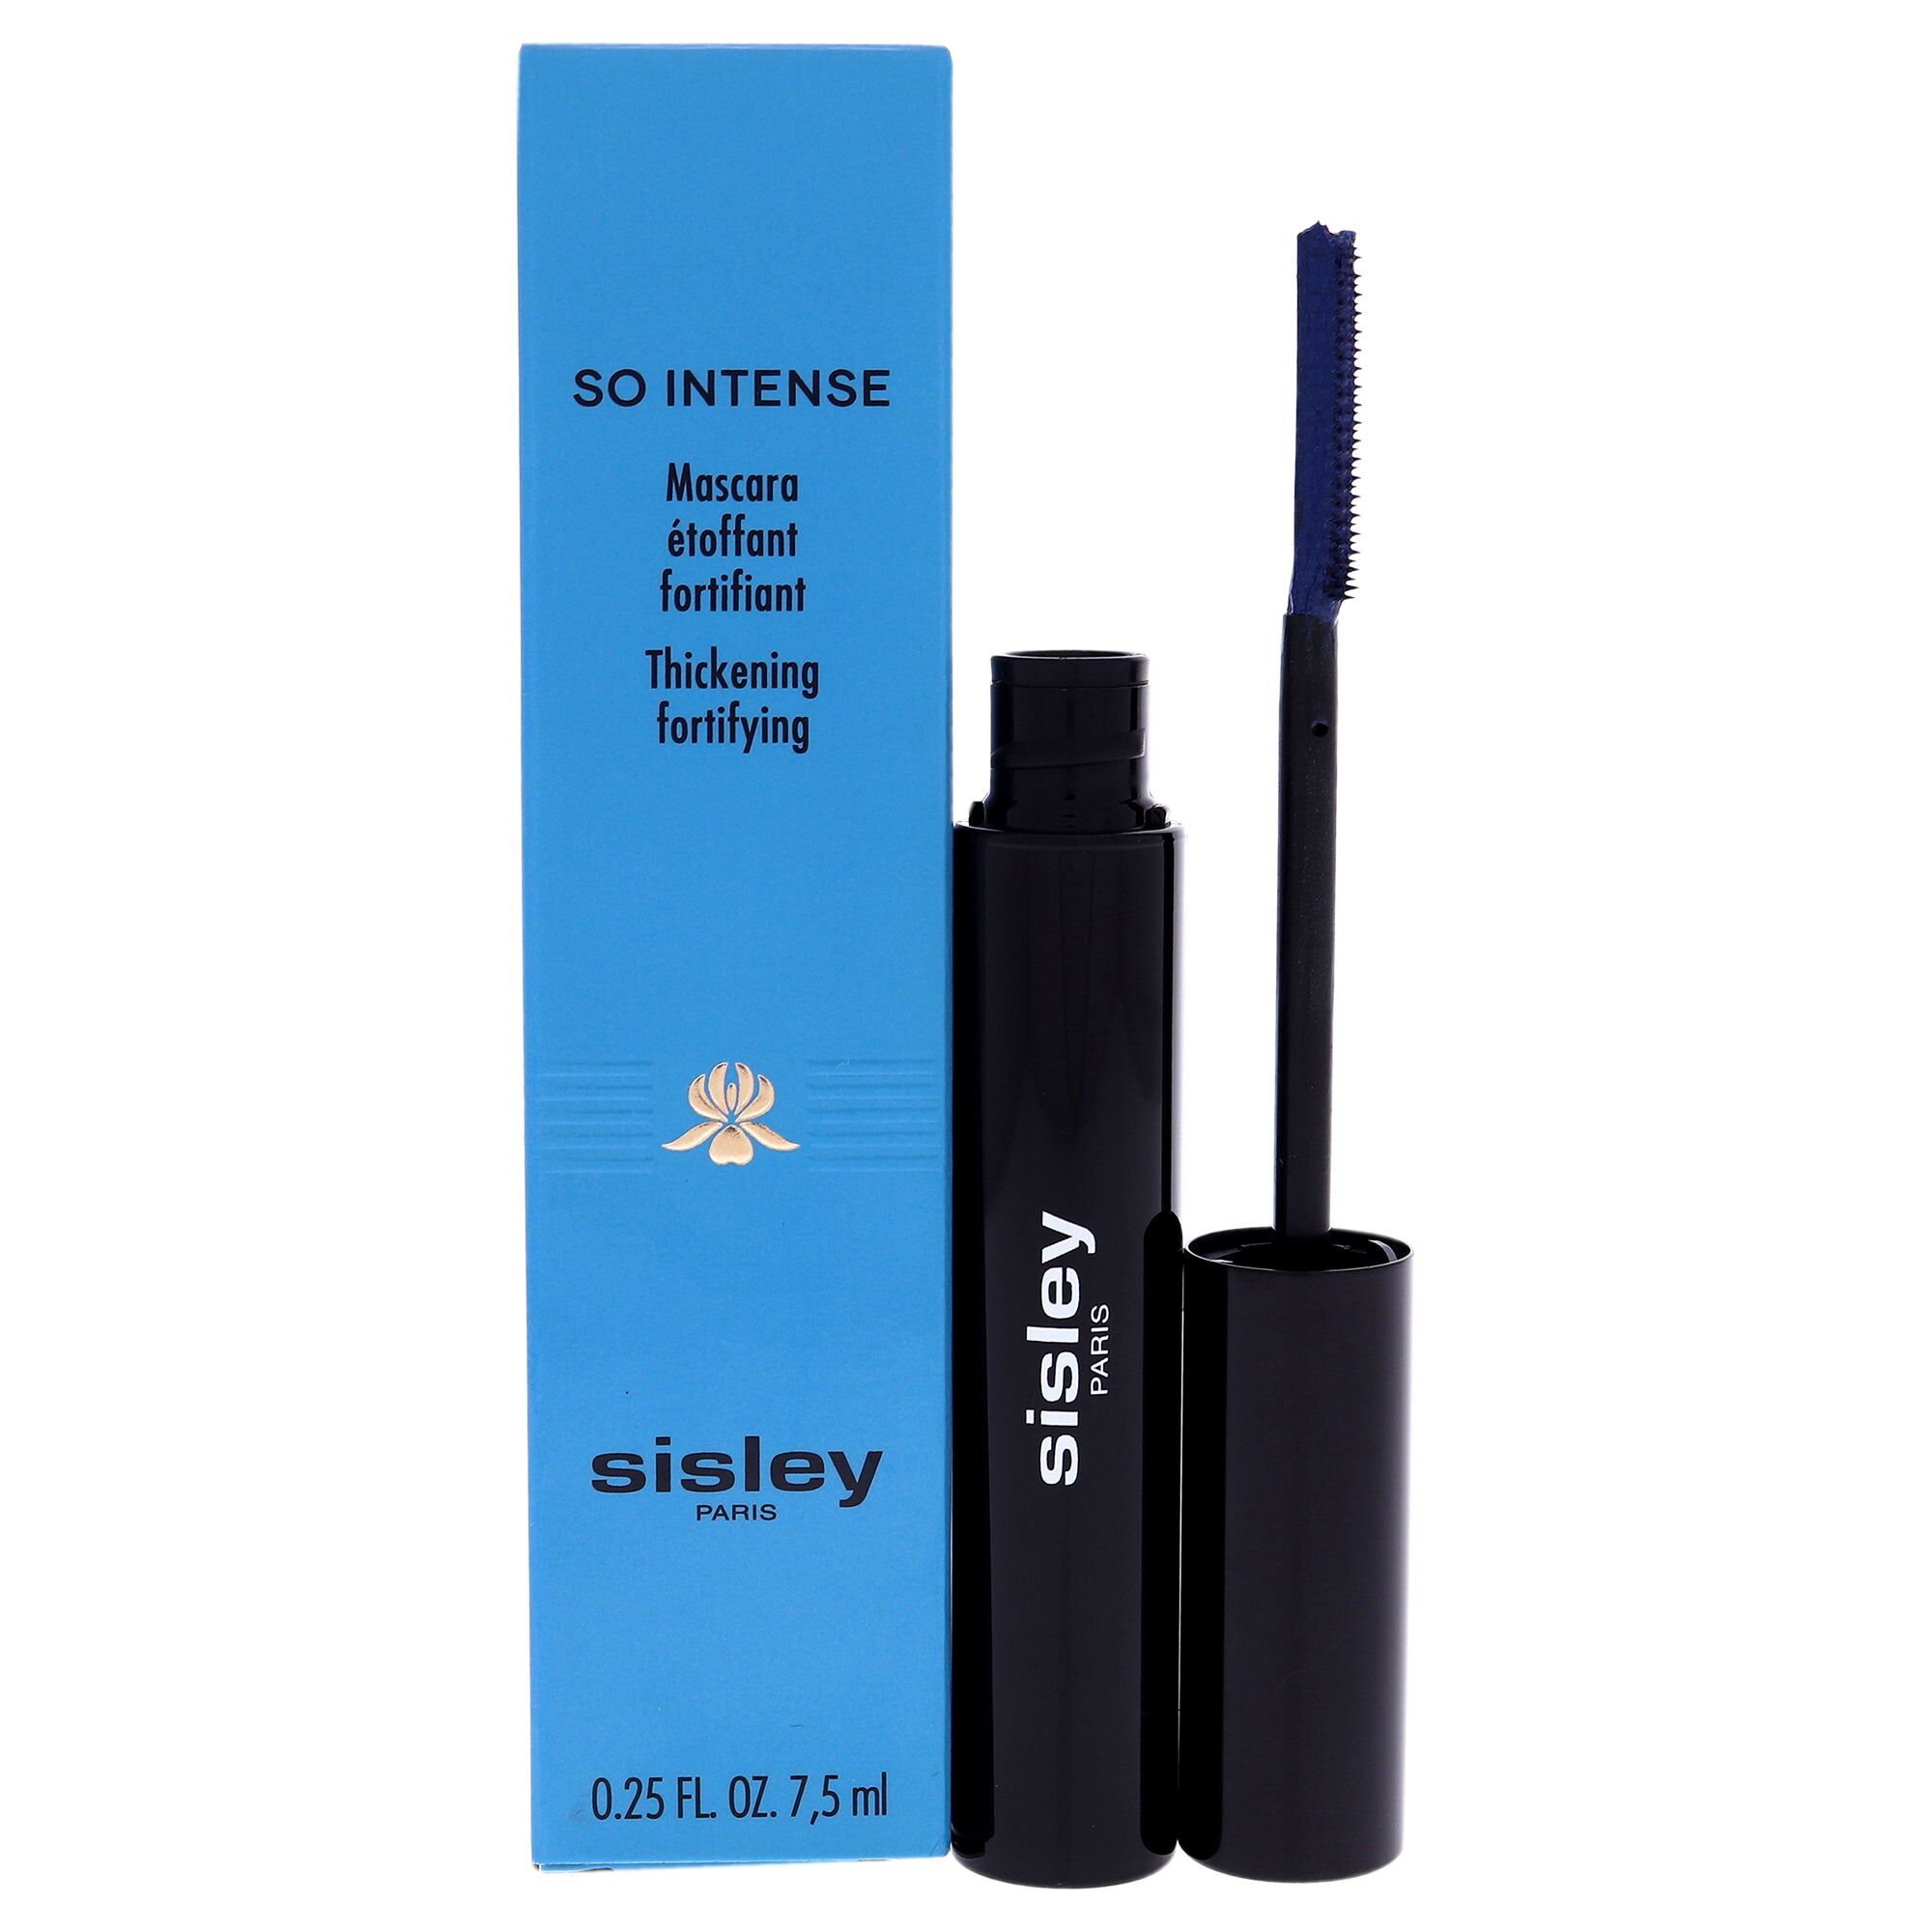 Mascara So Intense - 3 Deep Blue by Sisley for Women - 0.25 oz Mascara Small